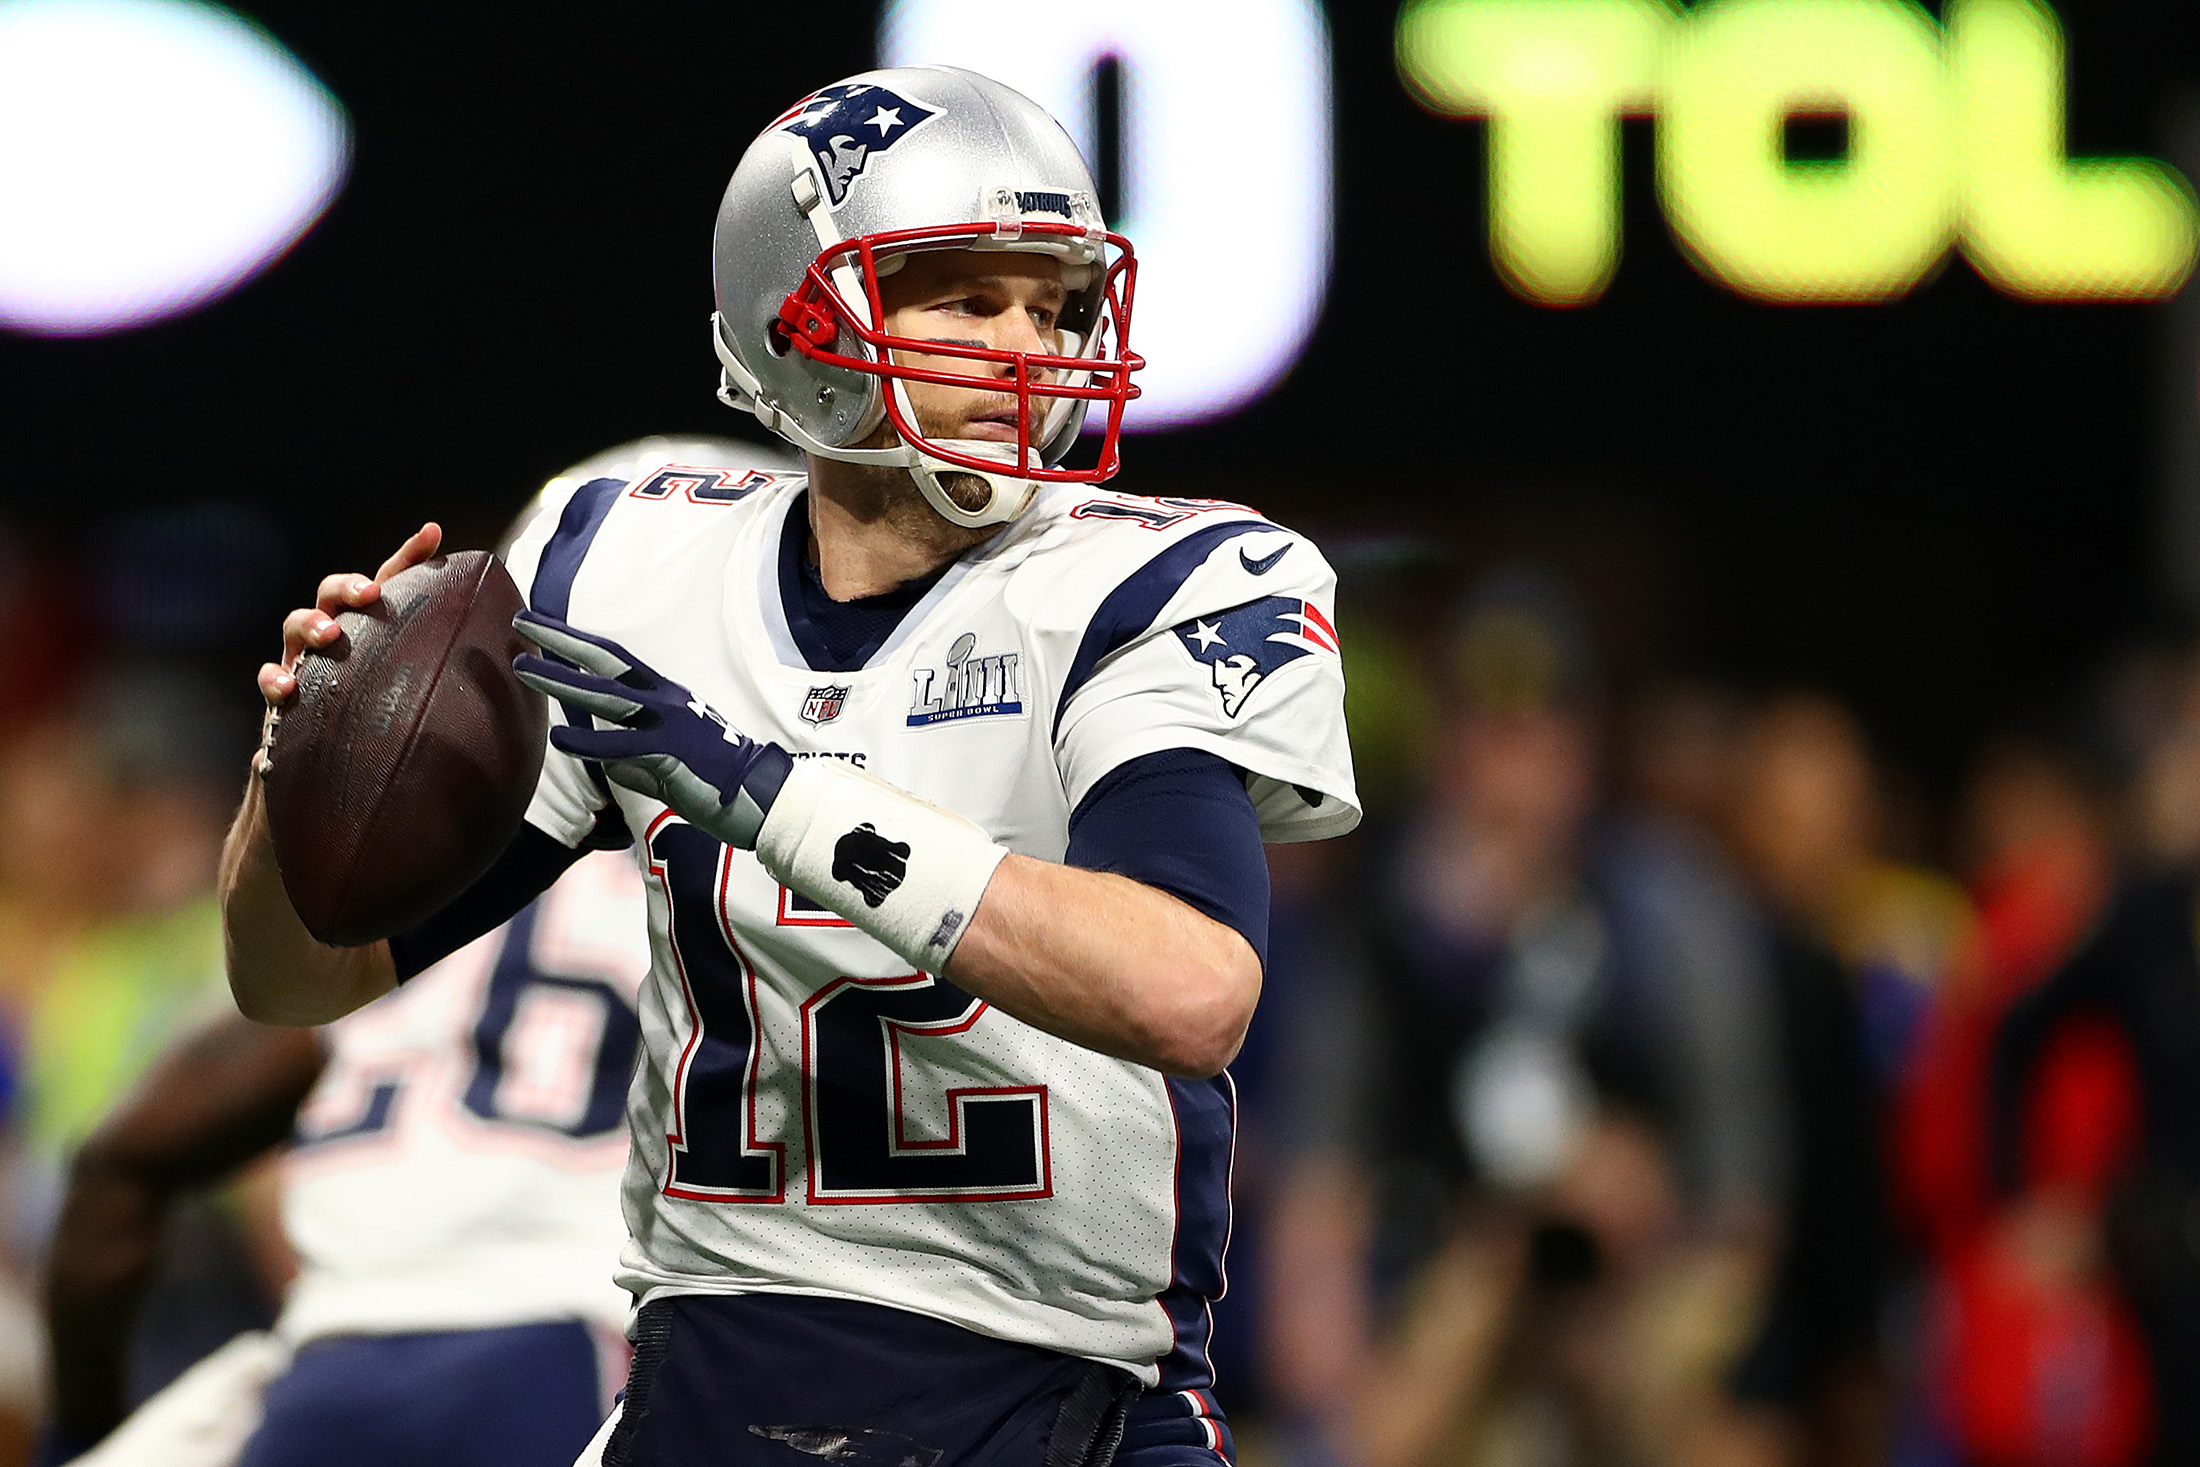 Tom Brady's arrival boosts Buccaneers merchandise sales in 2020